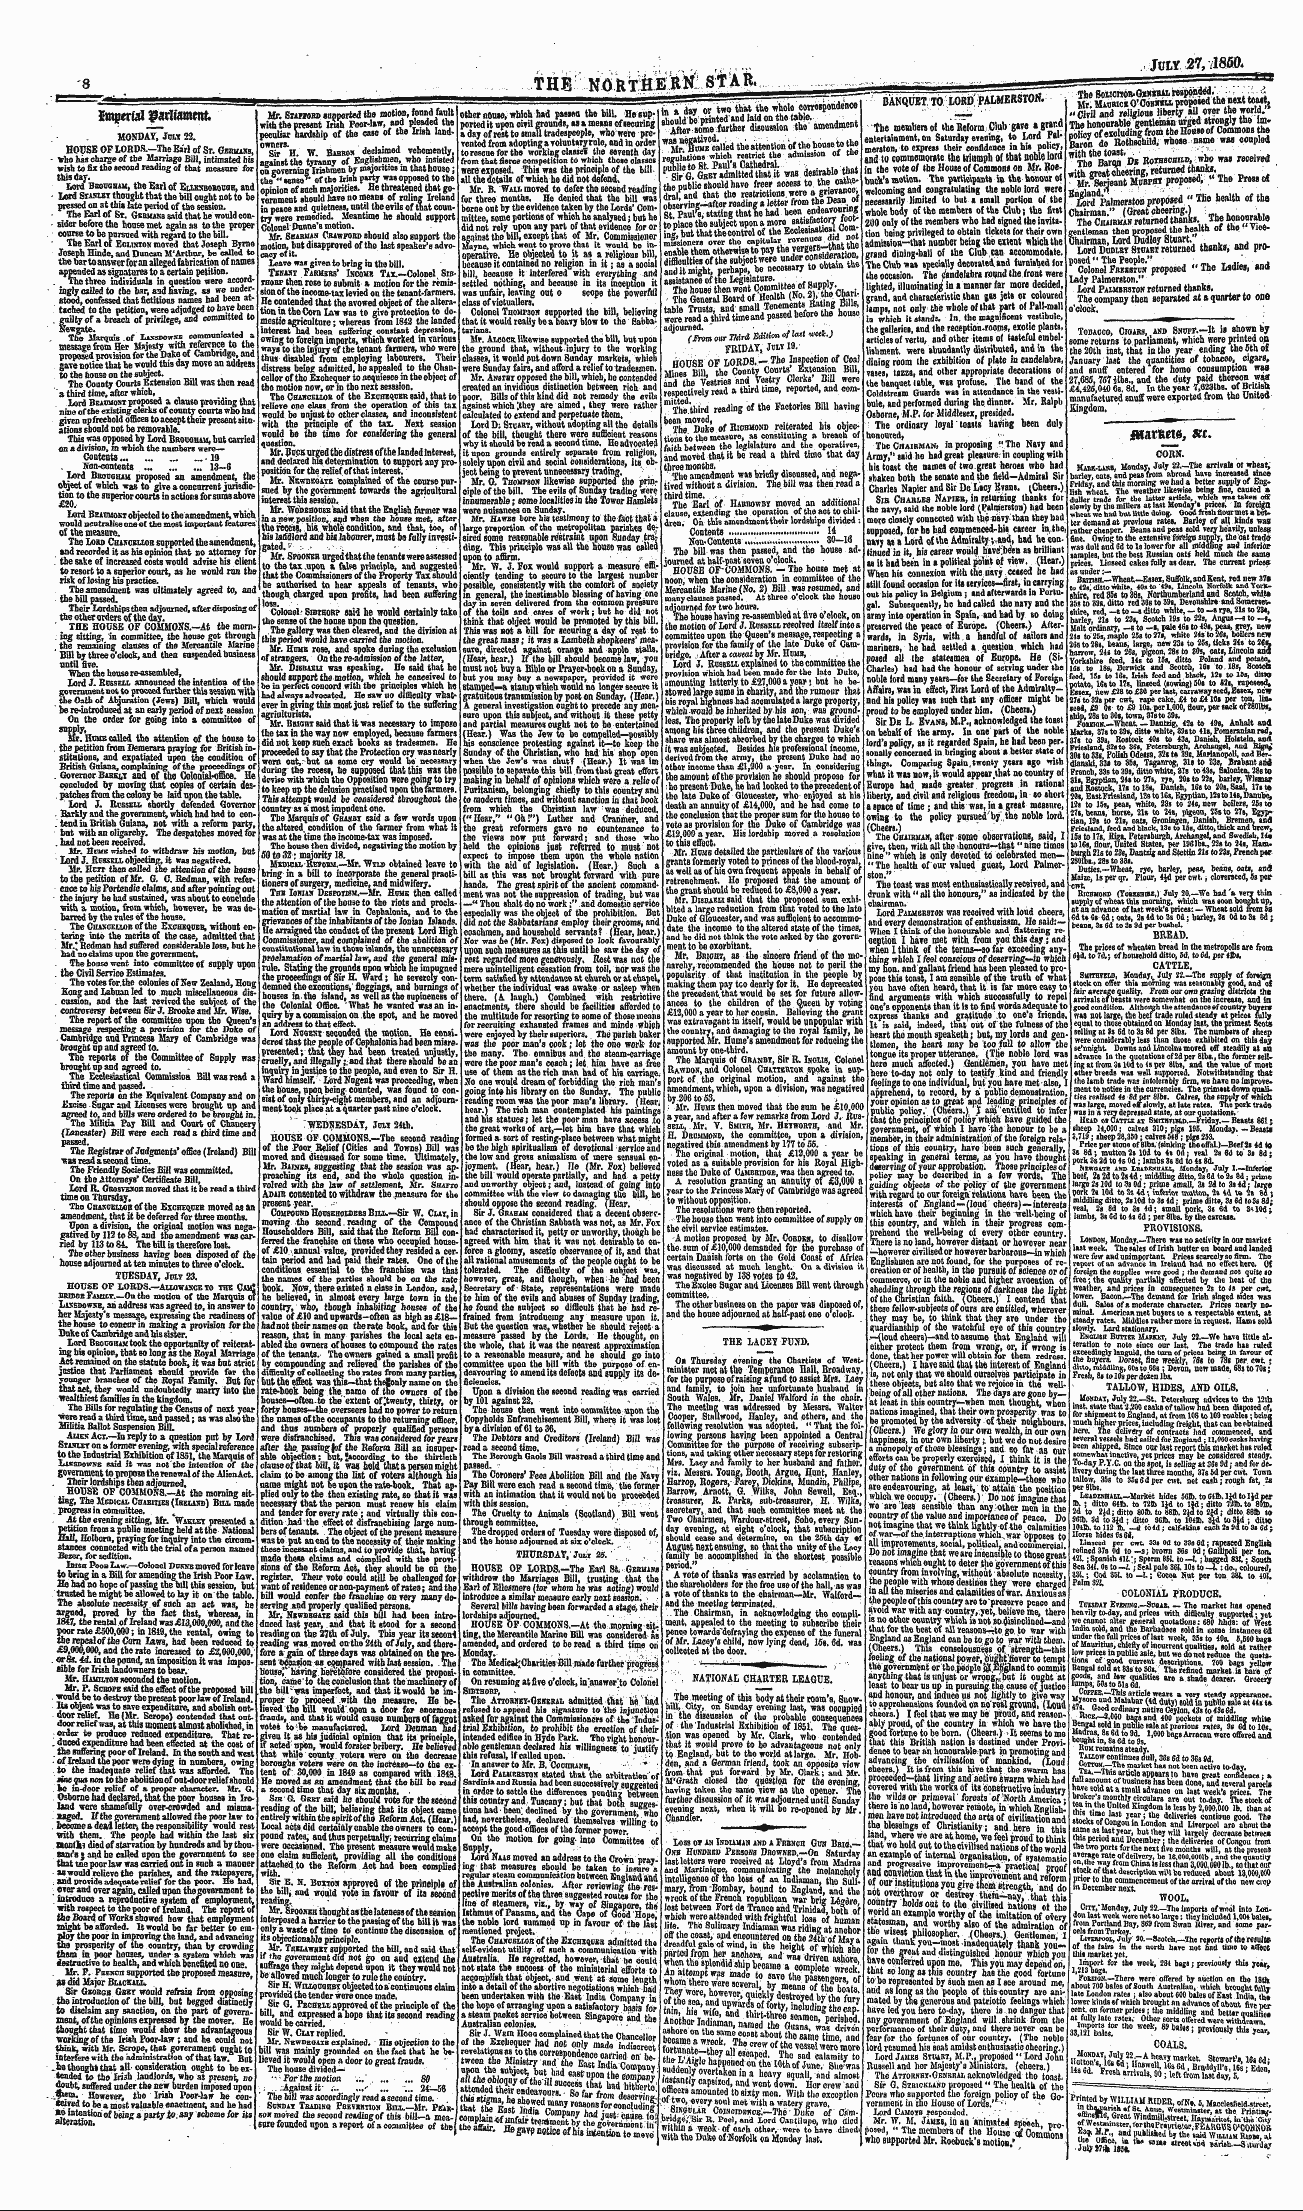 Northern Star (1837-1852): jS F Y, 2nd edition - Loss Ot An Ibdiamas And A Frbnch Gun Bri...